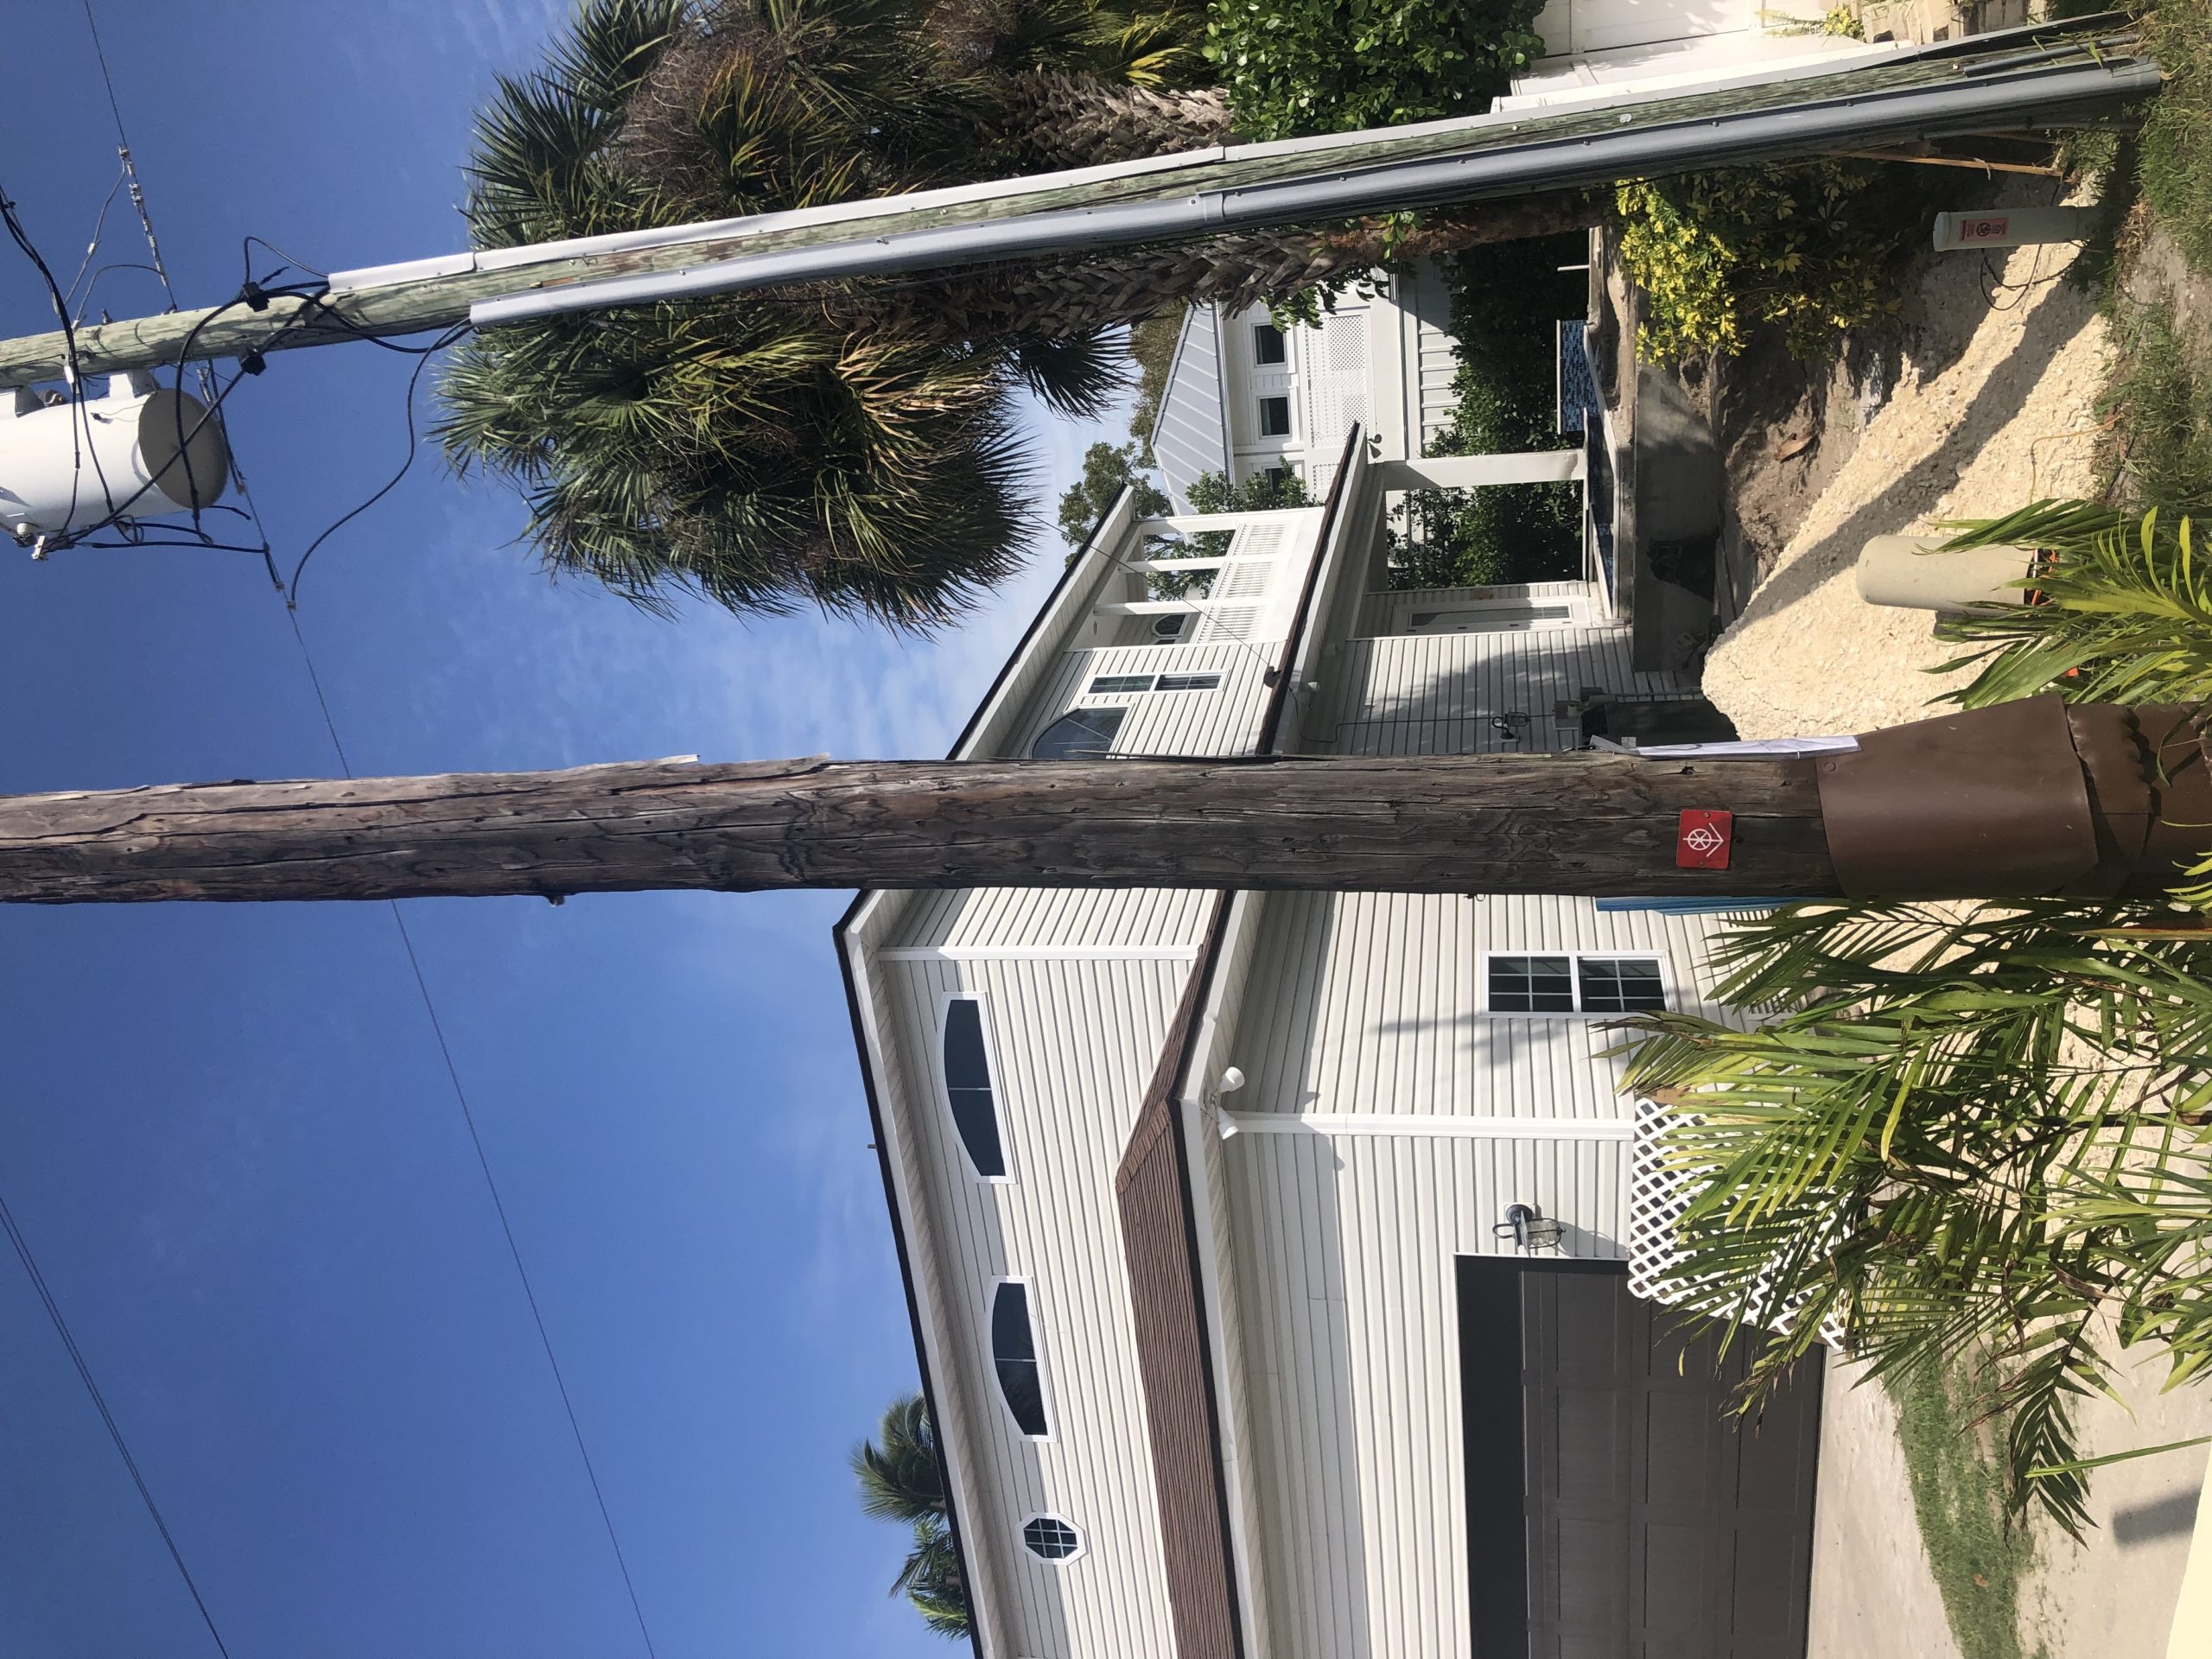 CenturyLink complaint Defunct telephone pole